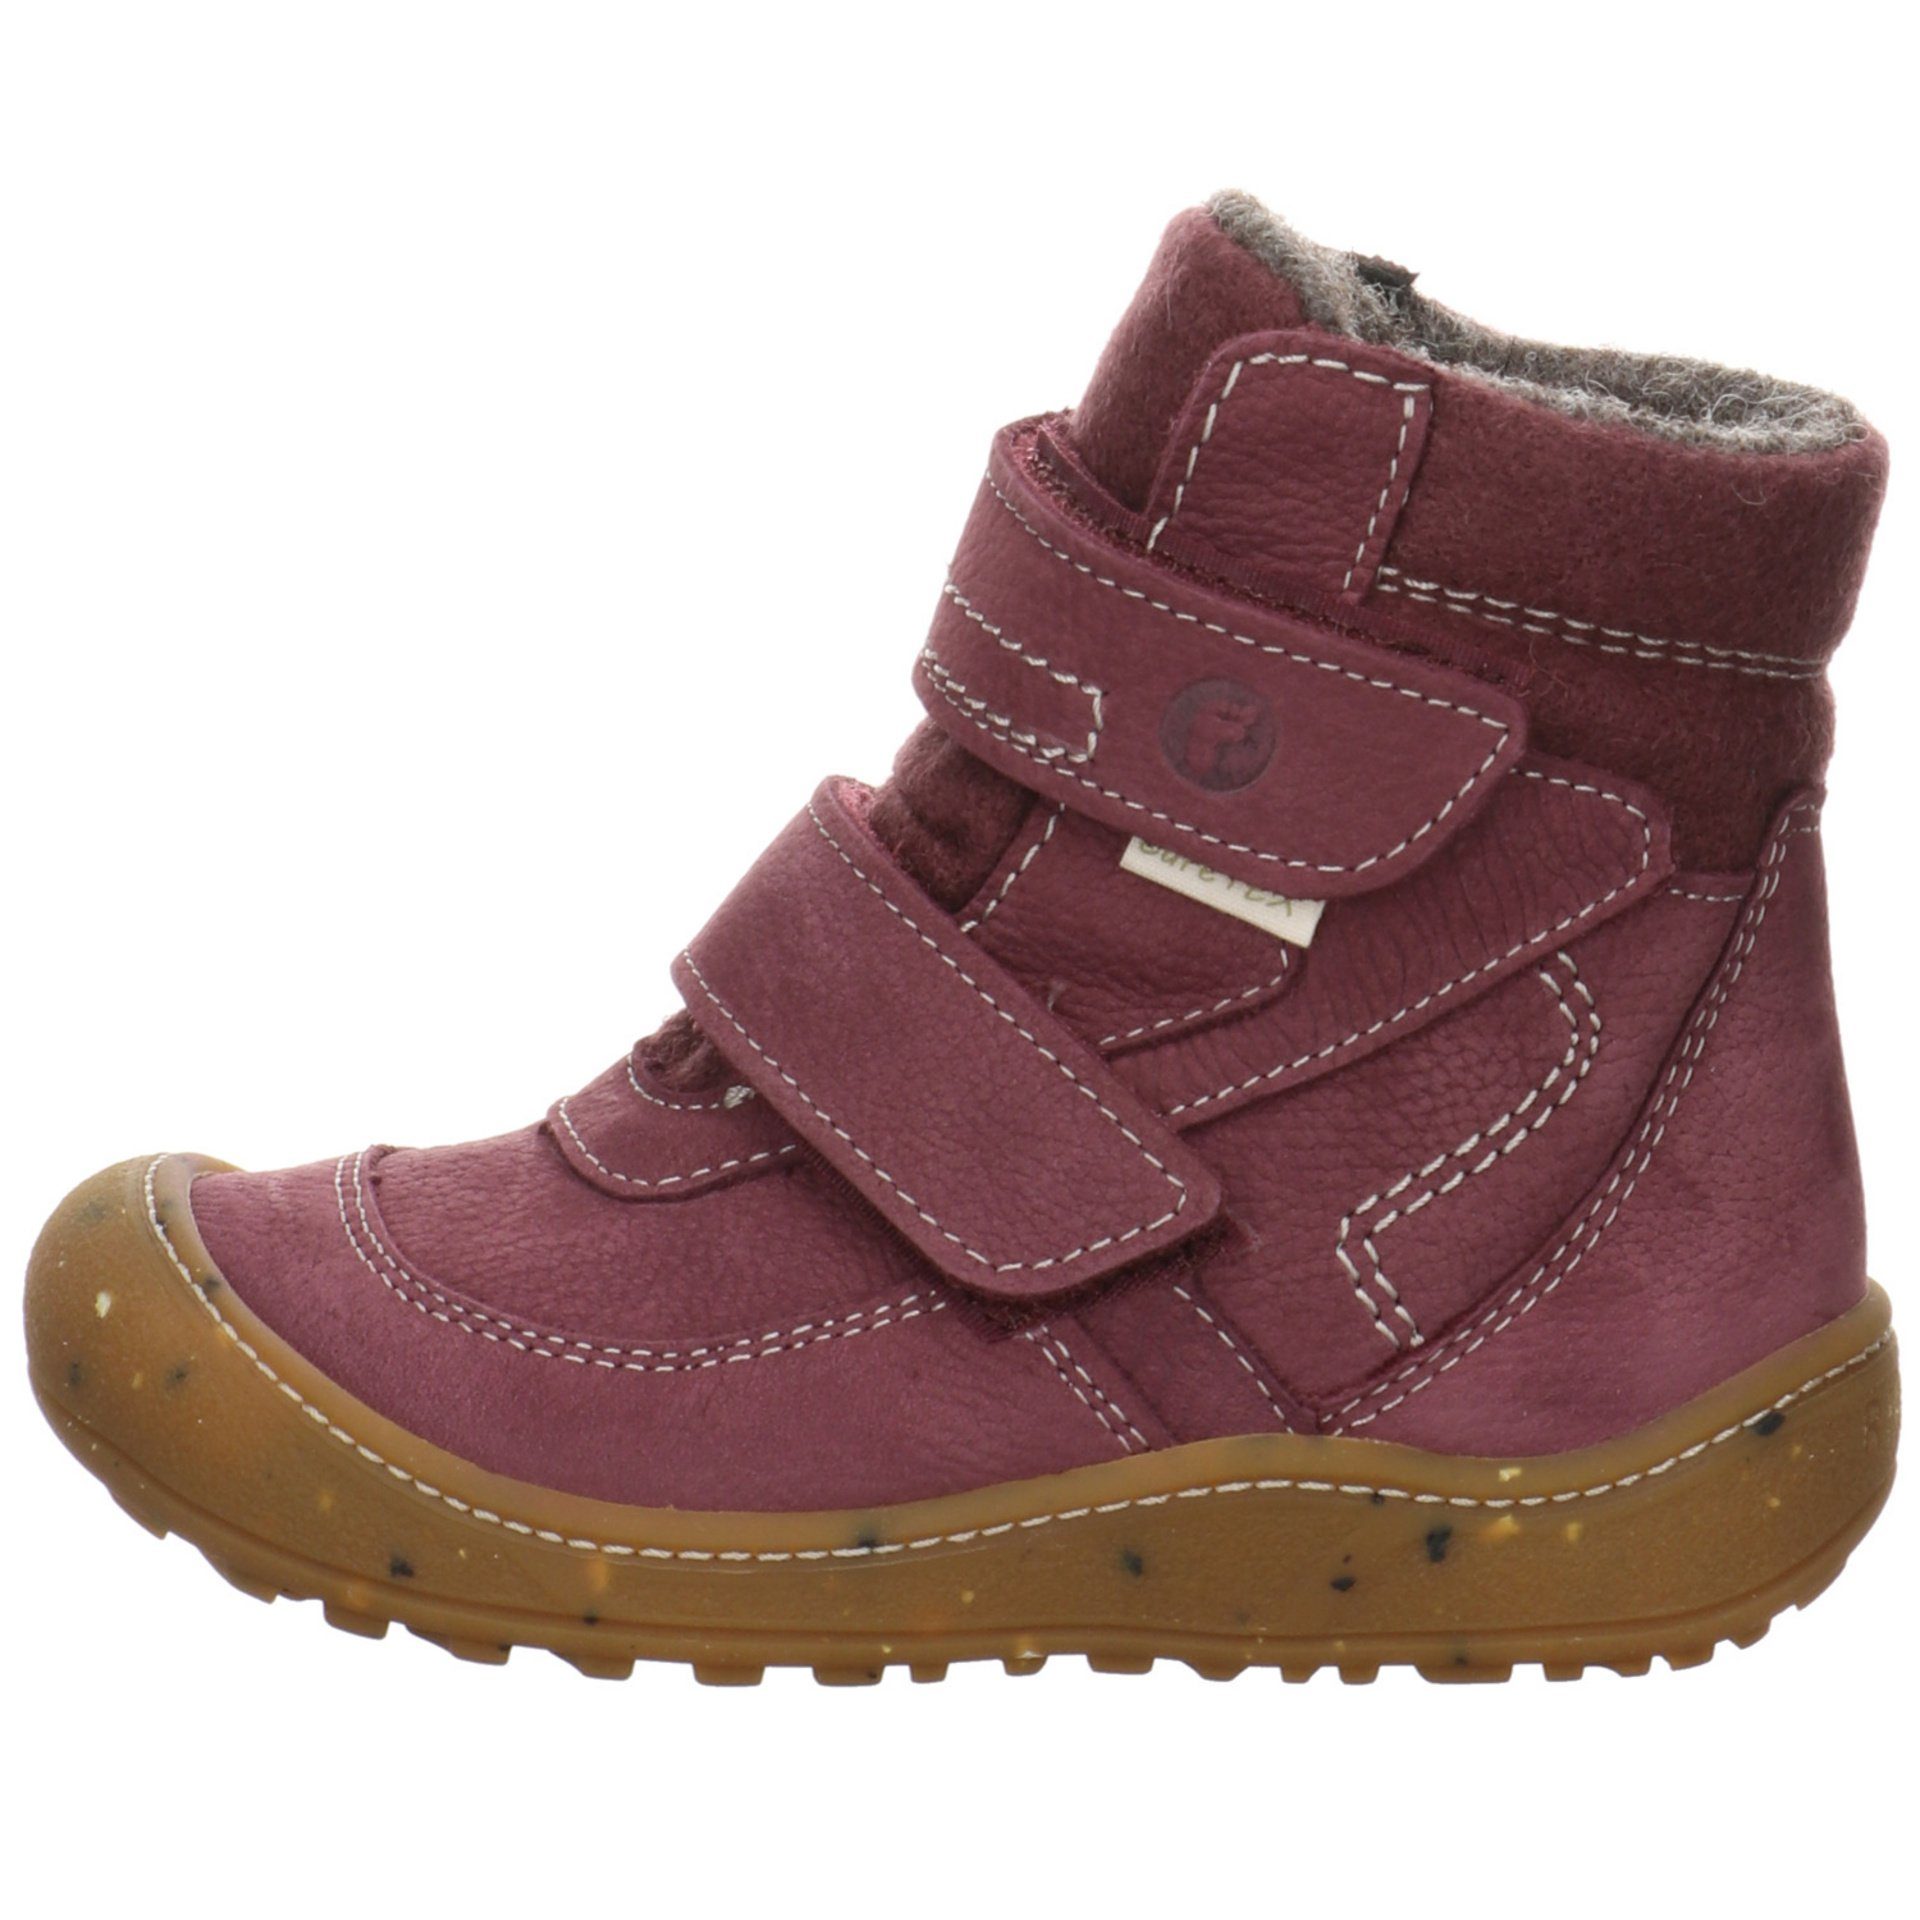 pflaume Leder-/Textilkombination Leder-/Textilkombination Wood uni Ricosta Winterboots Boots Tex